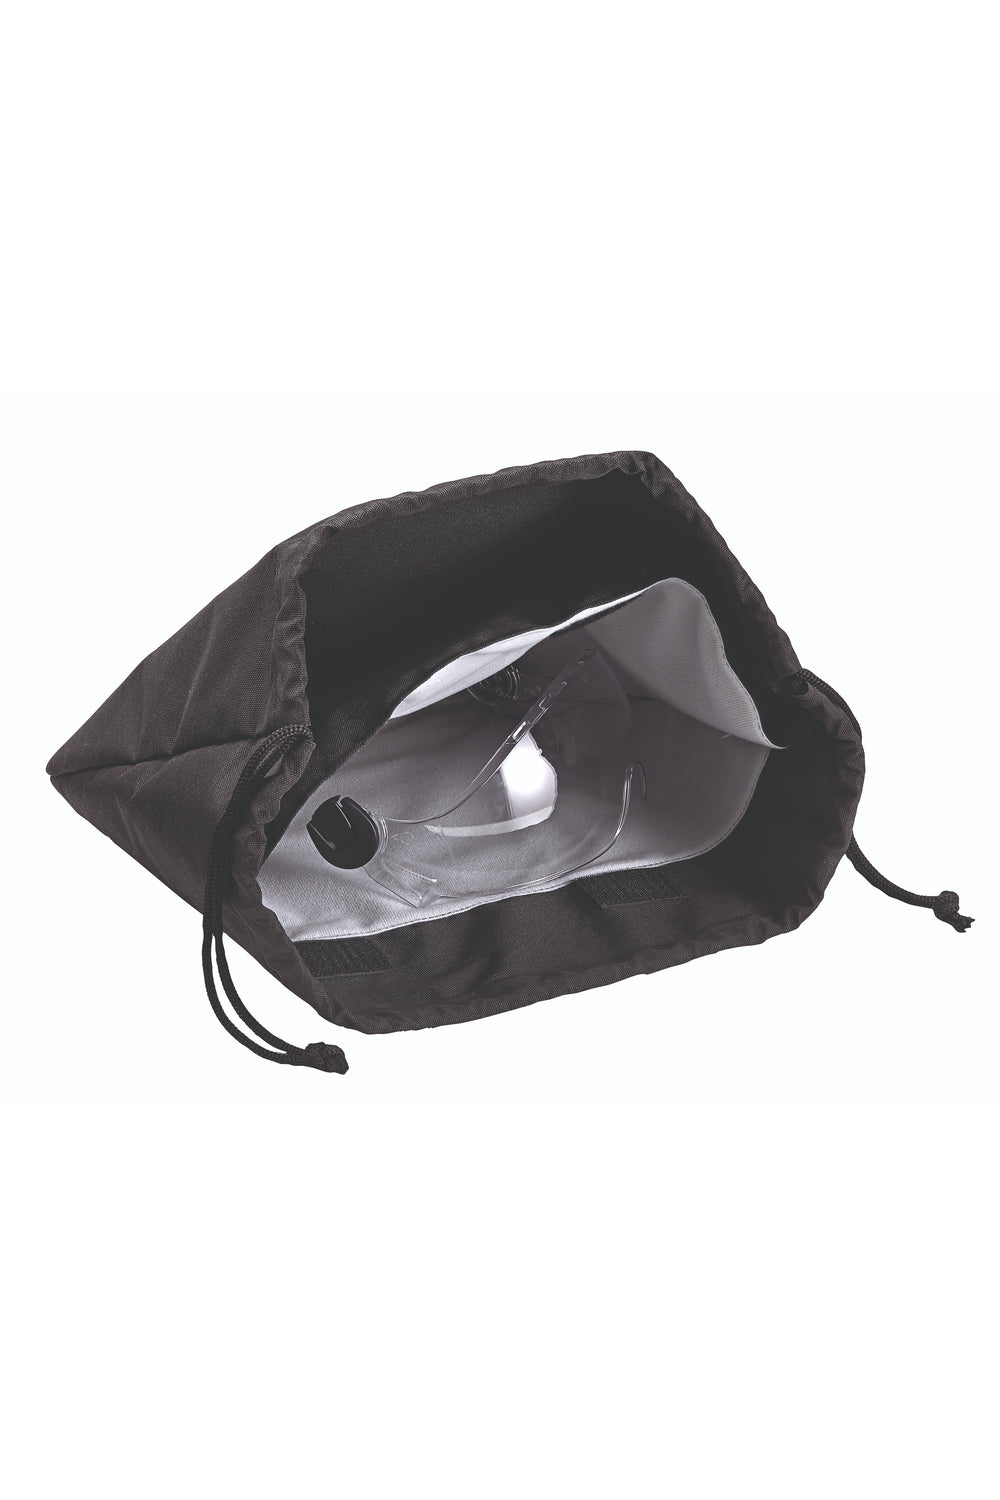 Petzl - Storage Bag for Vertex and Strato Helmets